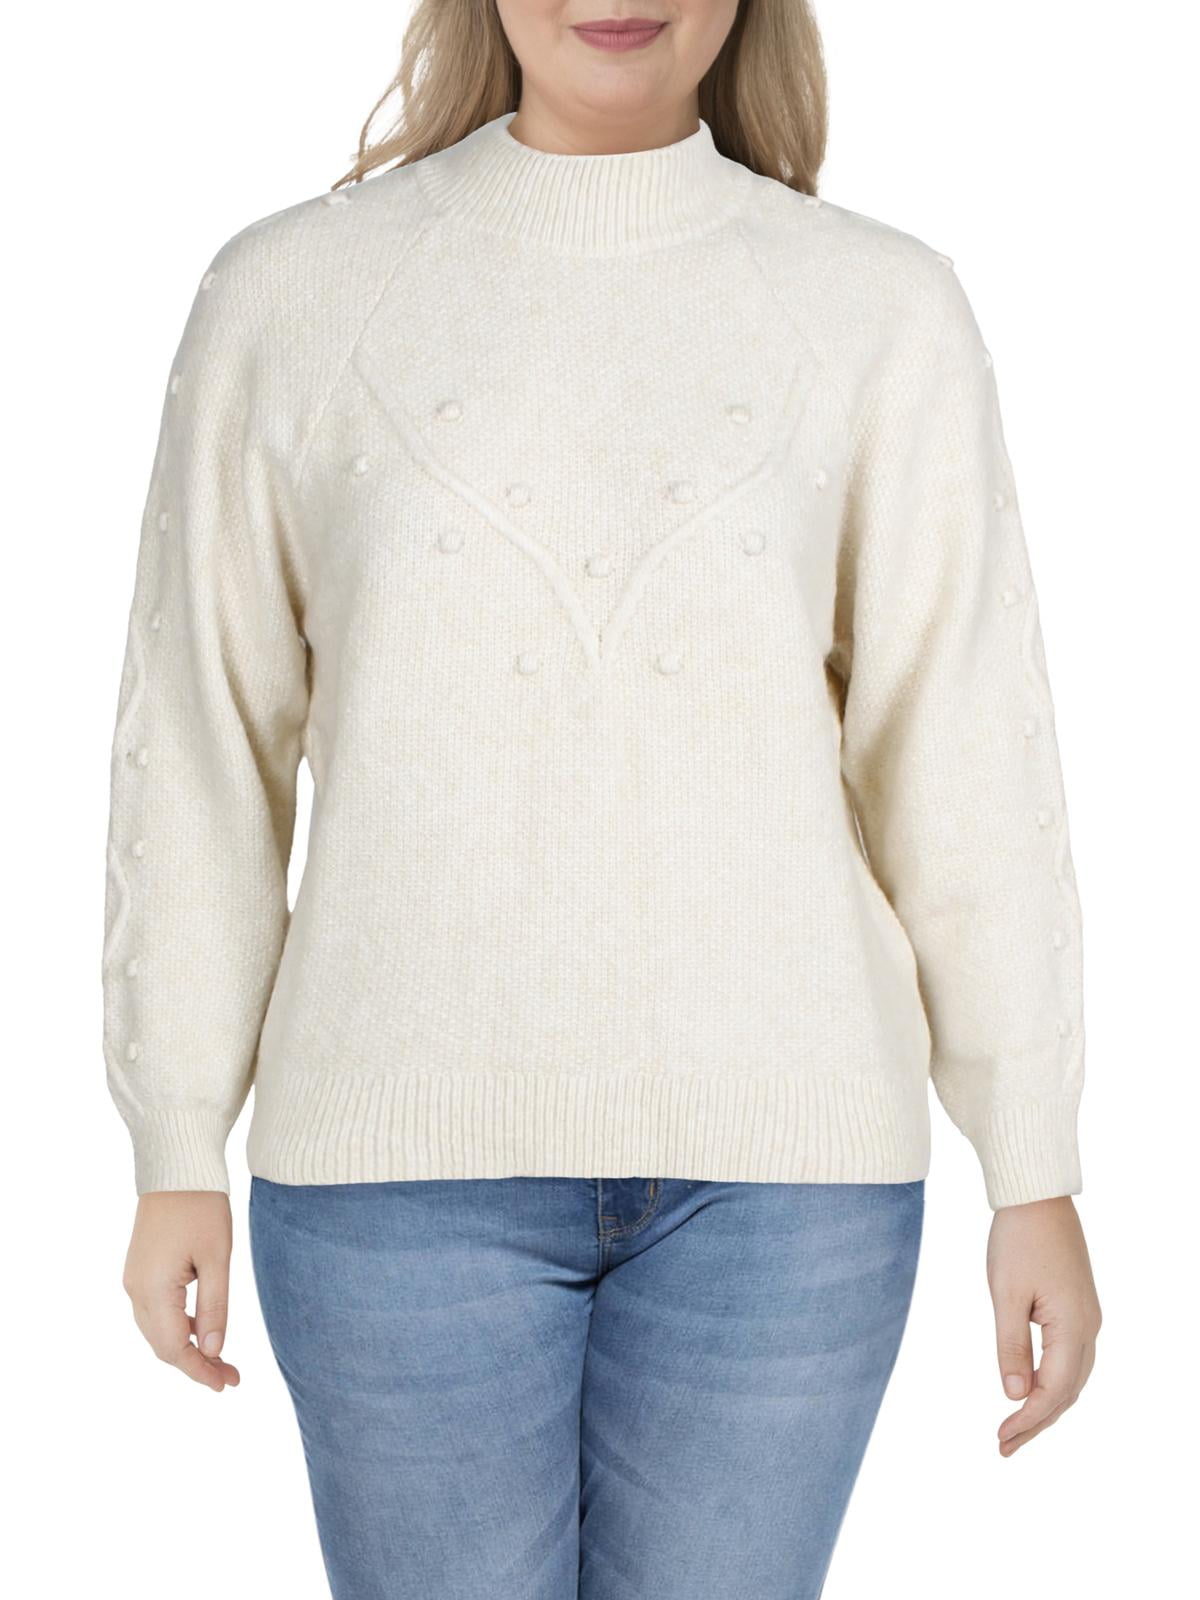 Vero Moda Womens Cub Popcorn Pullover Sweater XL - Walmart.com